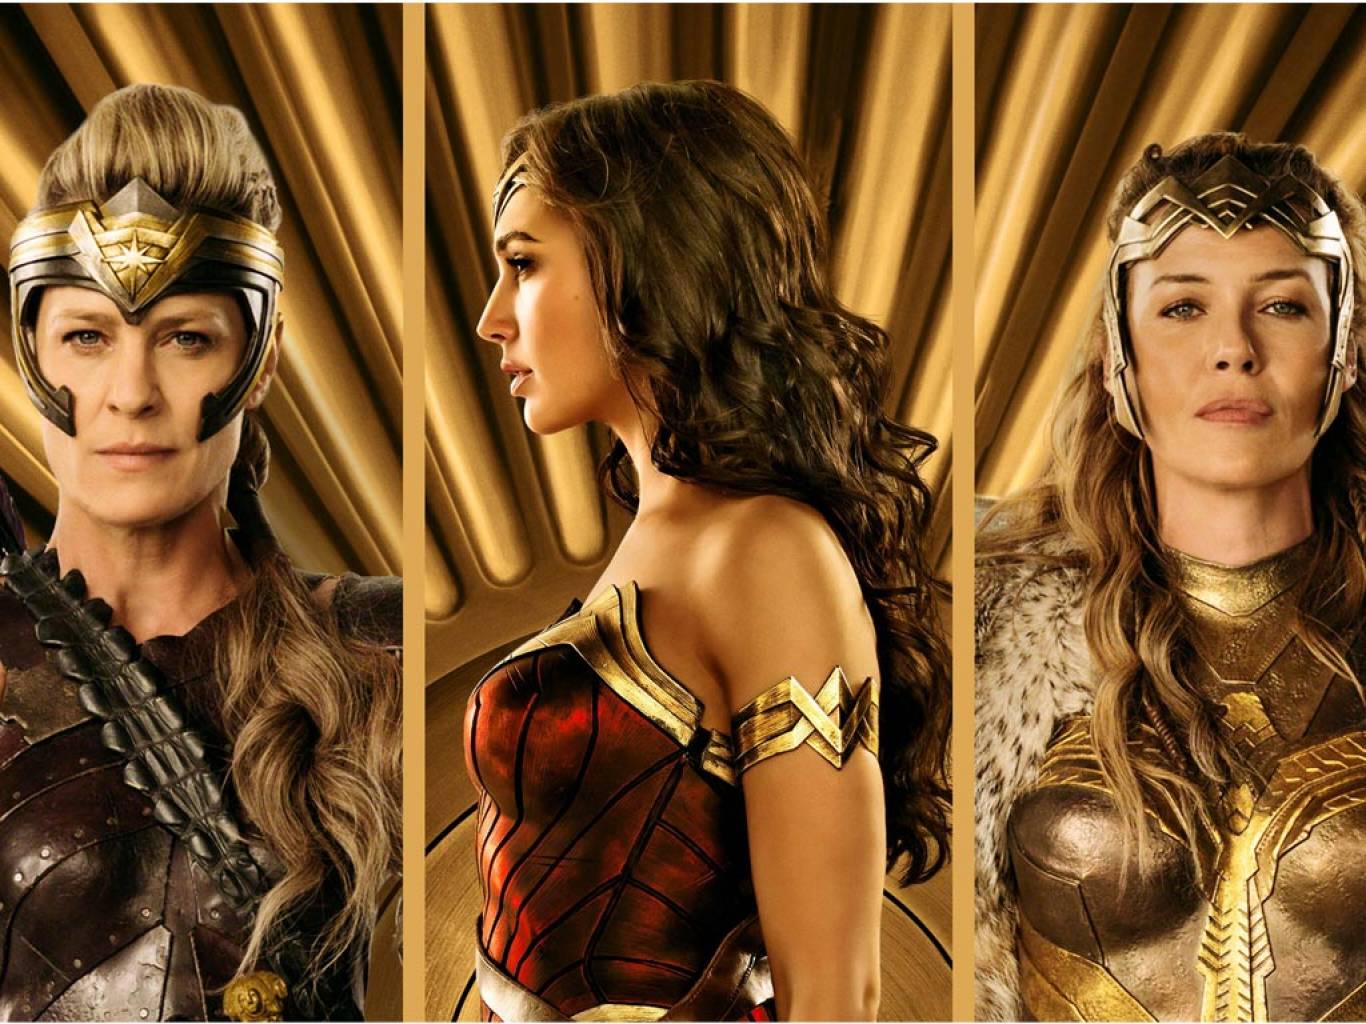 Wonder Woman Movie HD Wallpaper. Wonder Woman HD Movie Wallpaper Free Download (1080p to 2K)